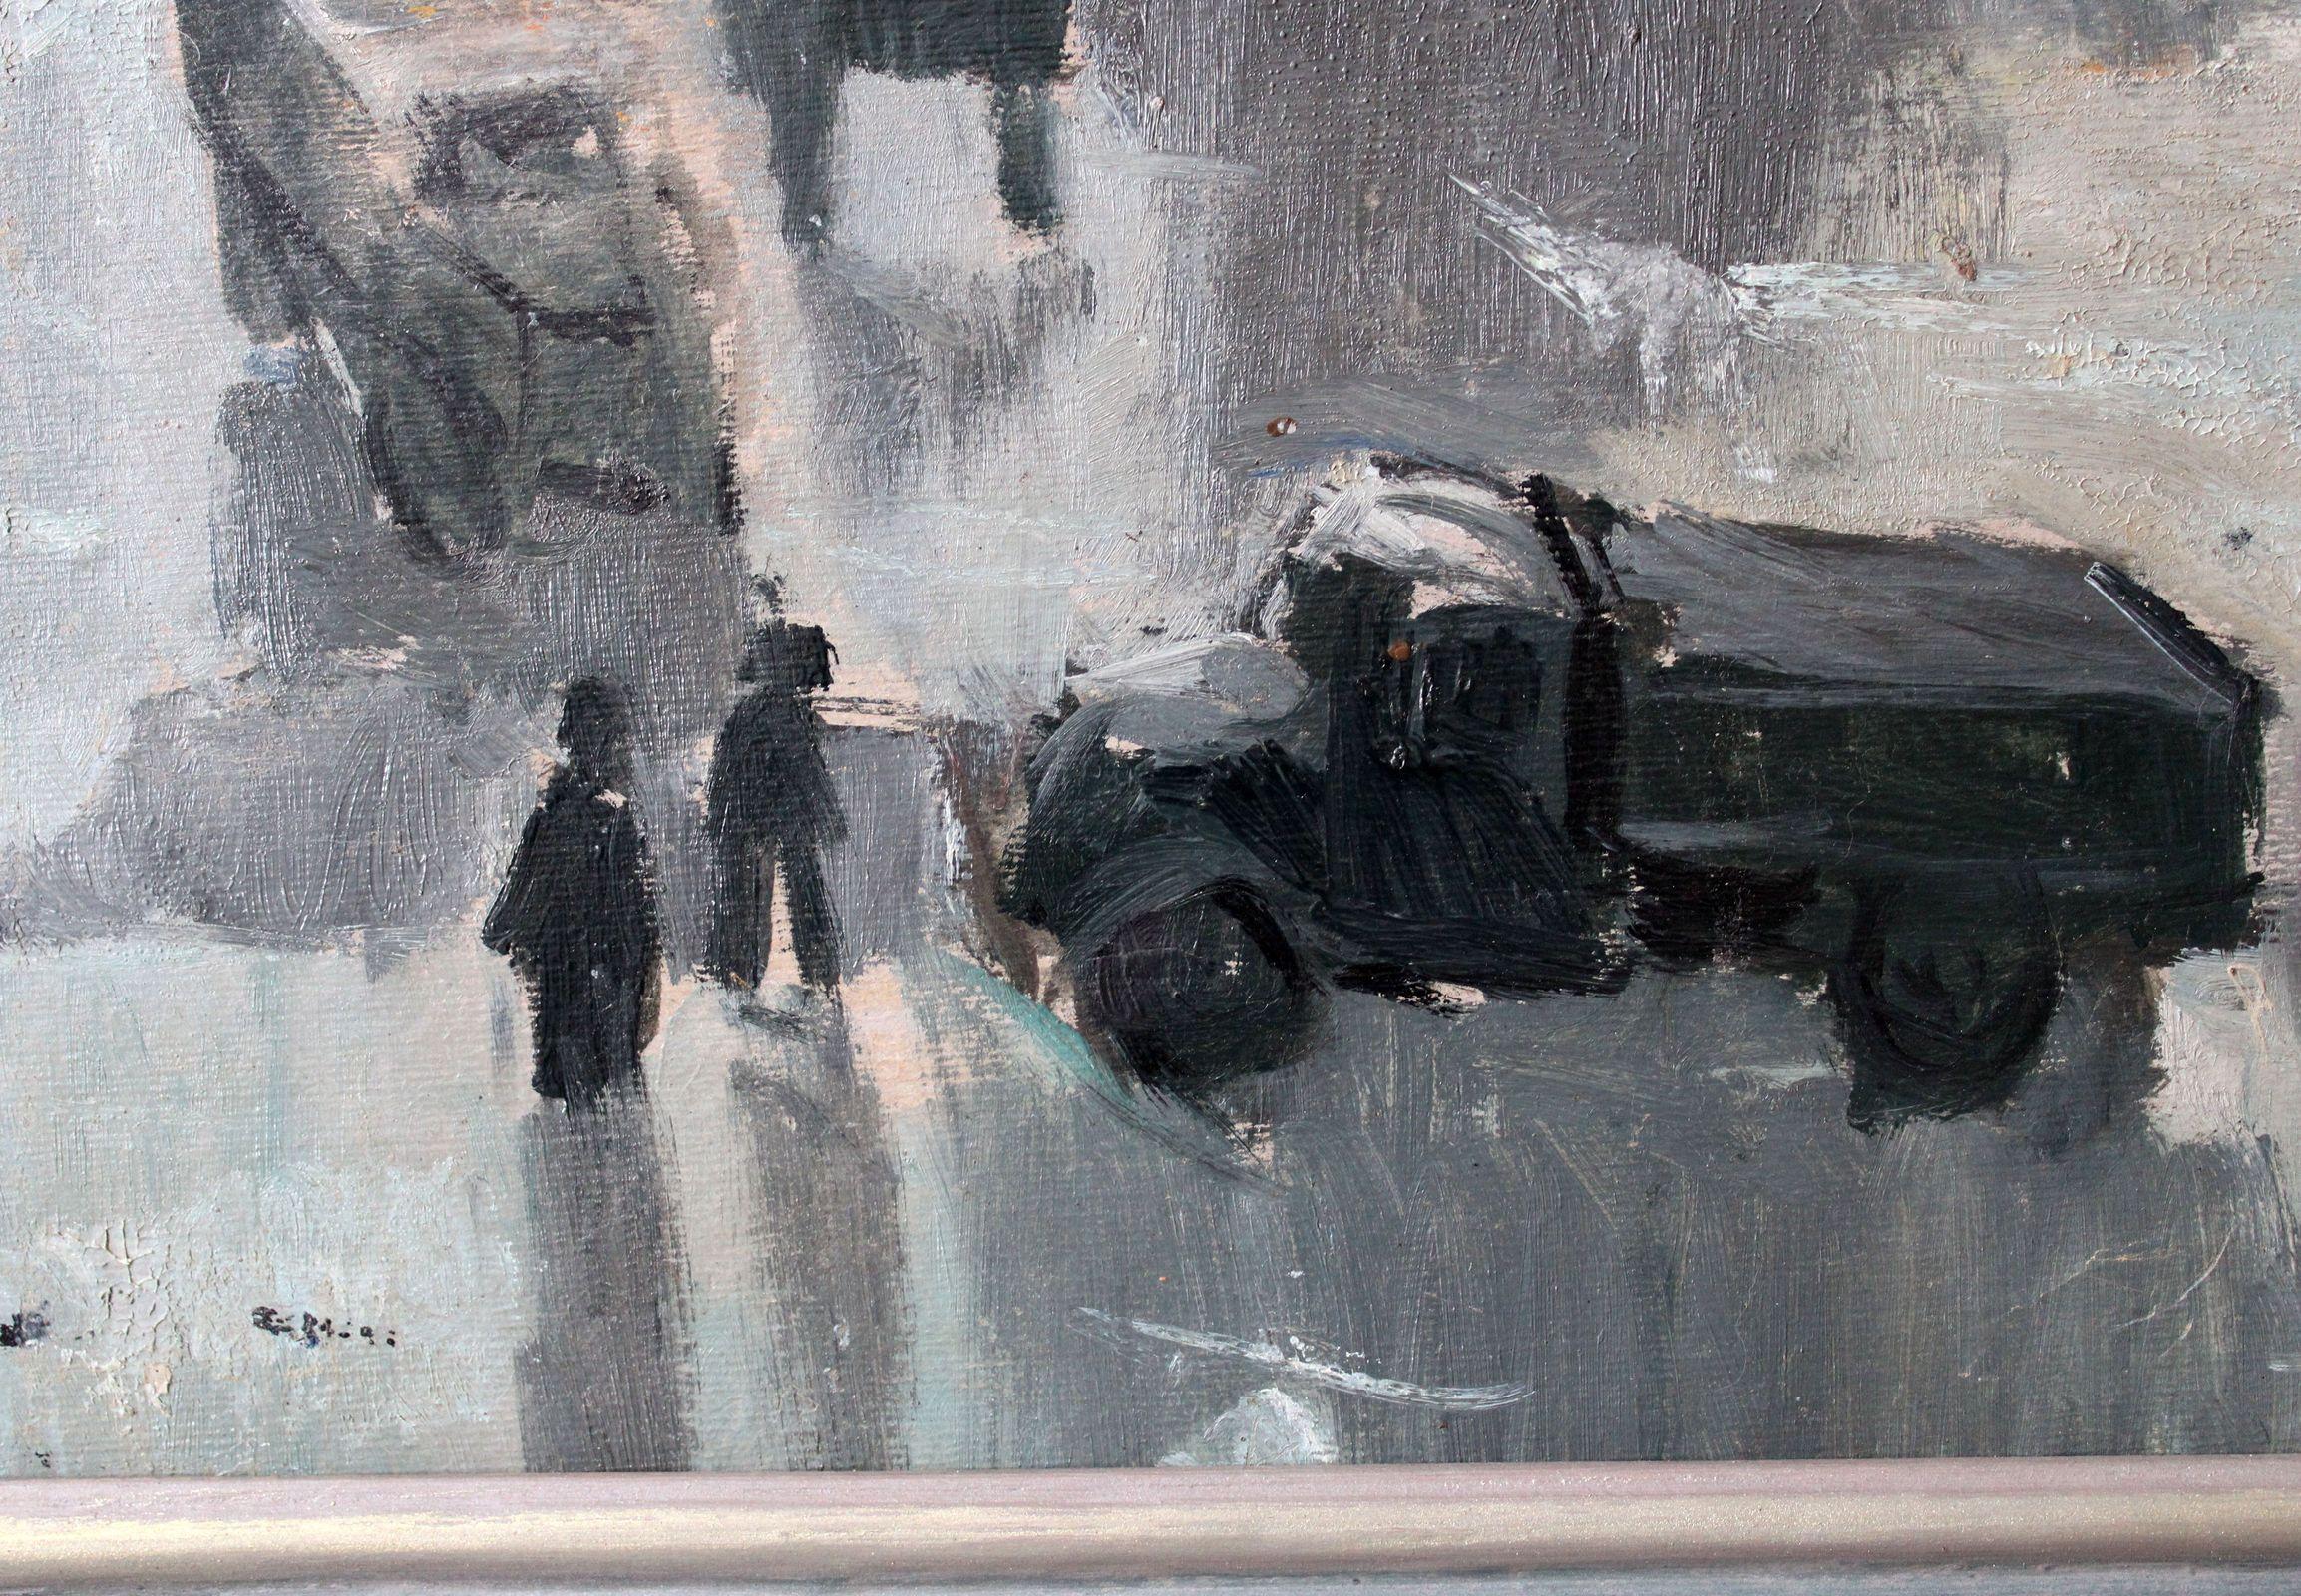 Am Abend, 1950-er Jahre, Karton, Öl, 46,5х34 cm

Anatoli Lebedew (1935-2014)